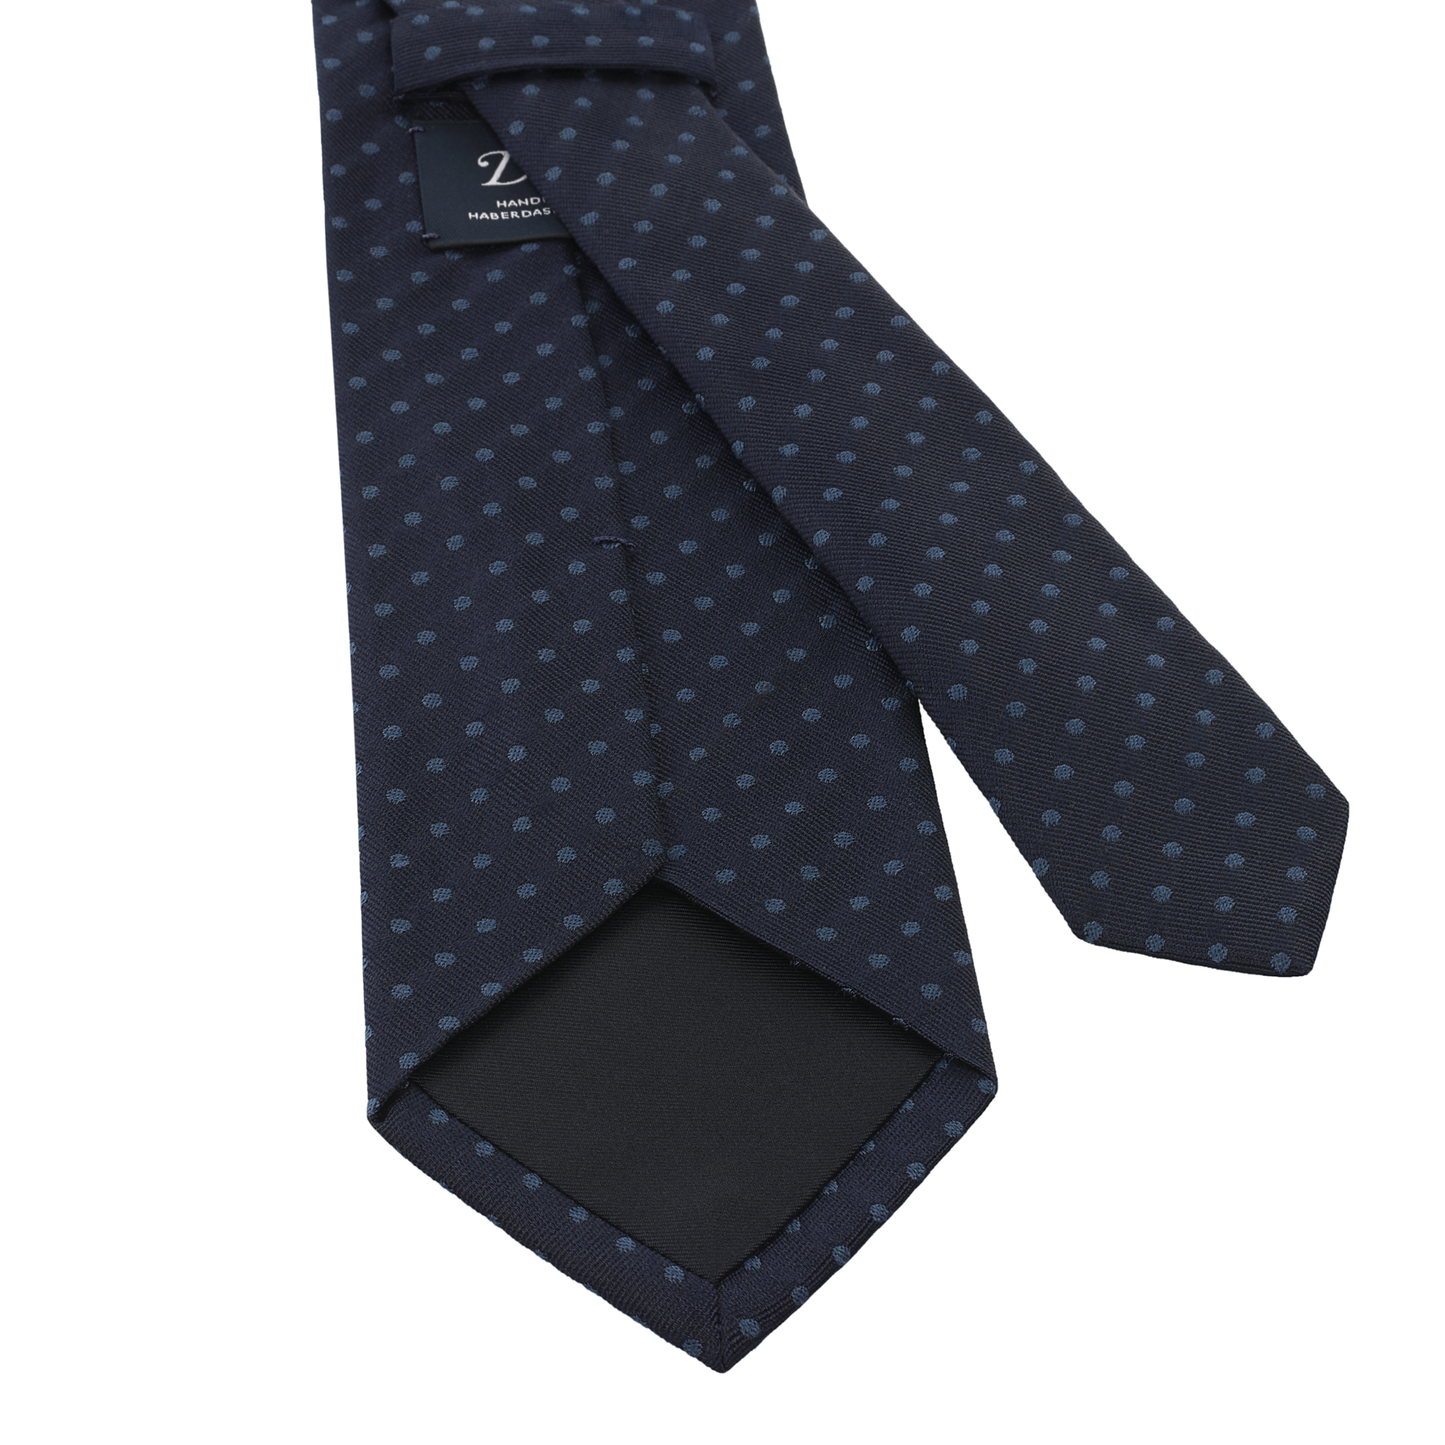 Jacquard Textured Tie in Navy Dot